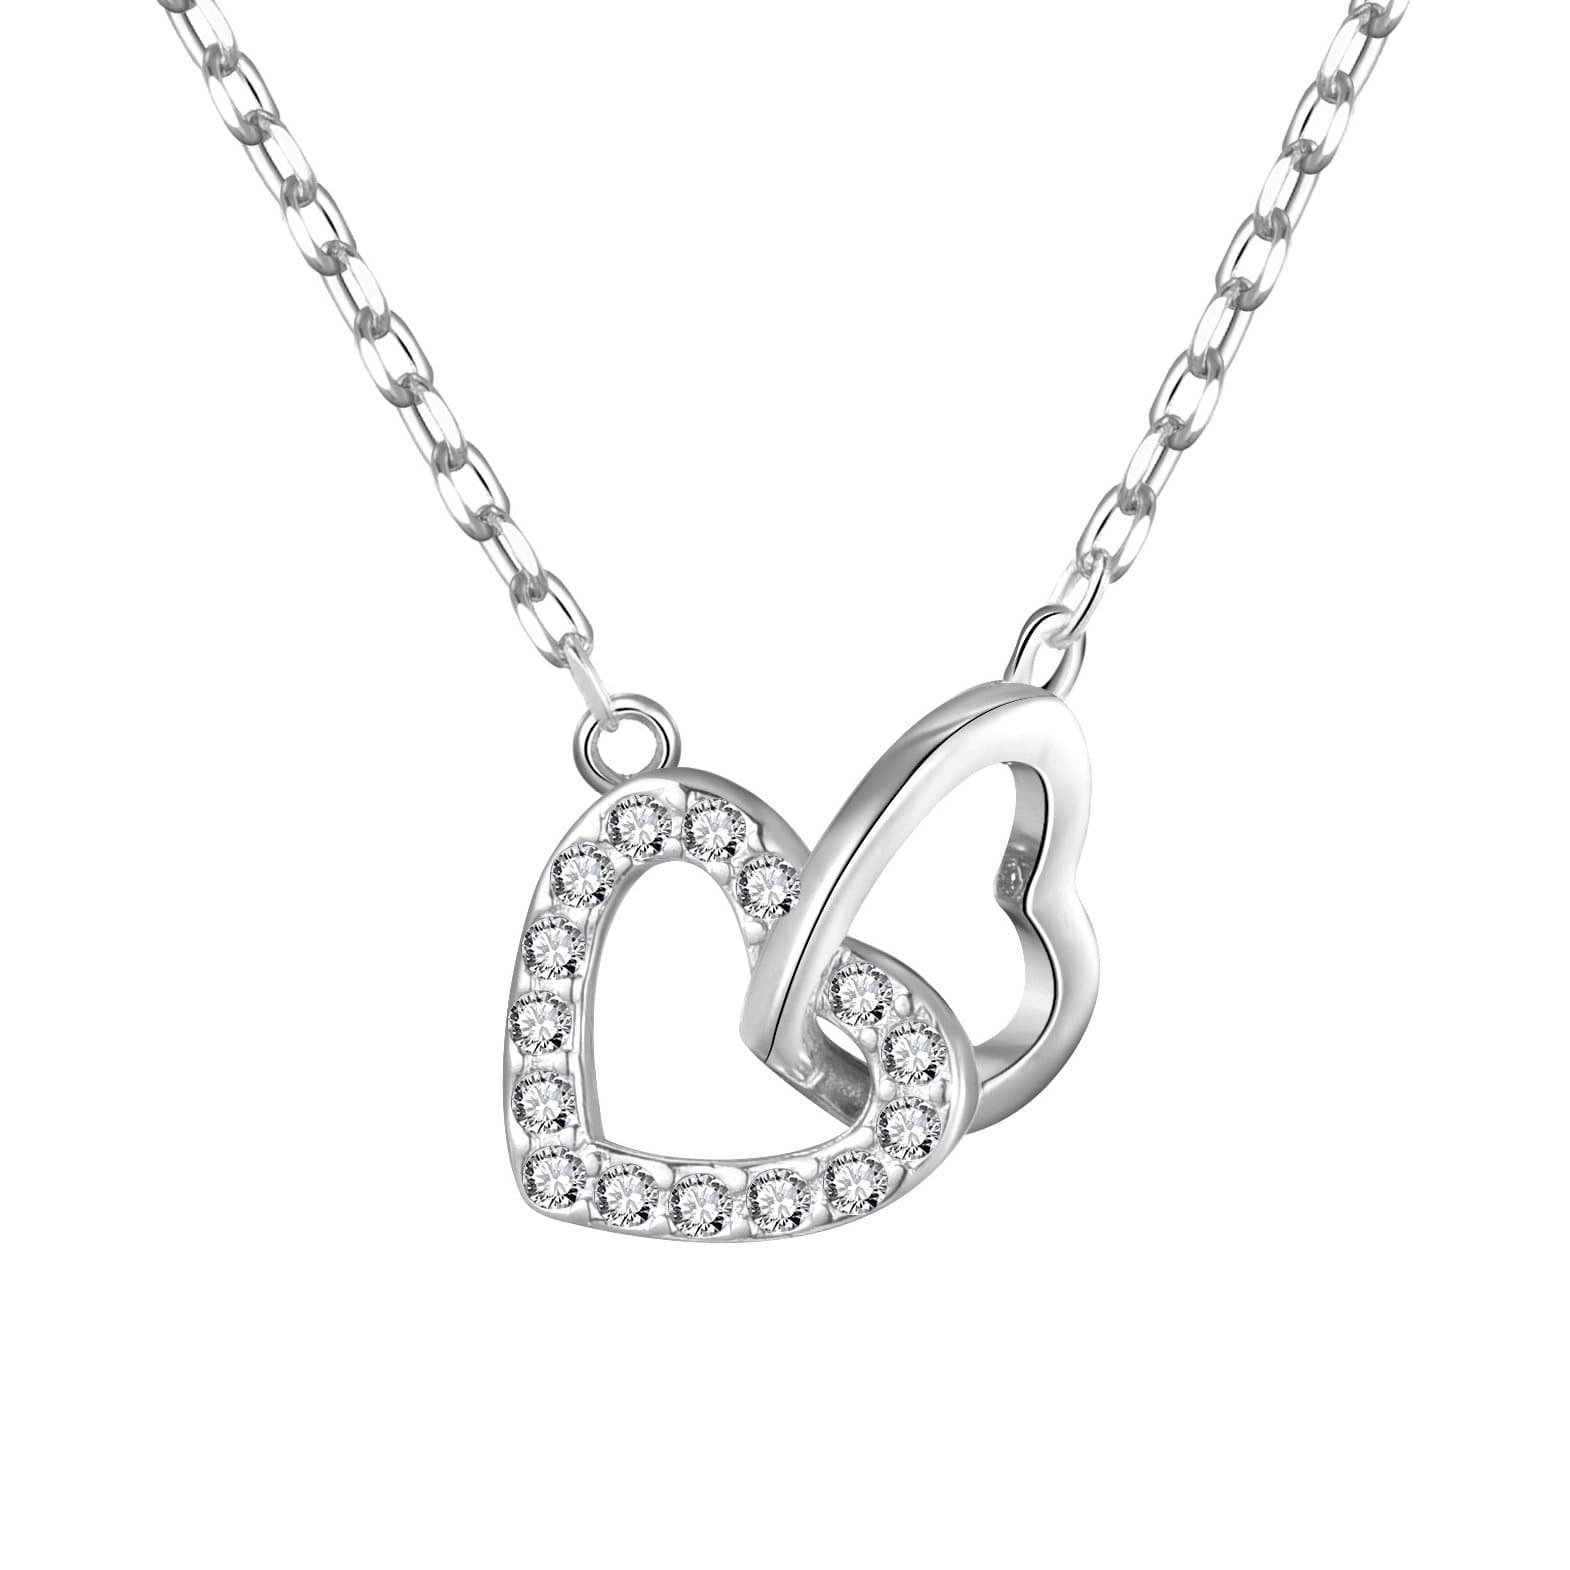 Heart Link Necklace Created with Zircondia® Crystals by Philip Jones Jewellery